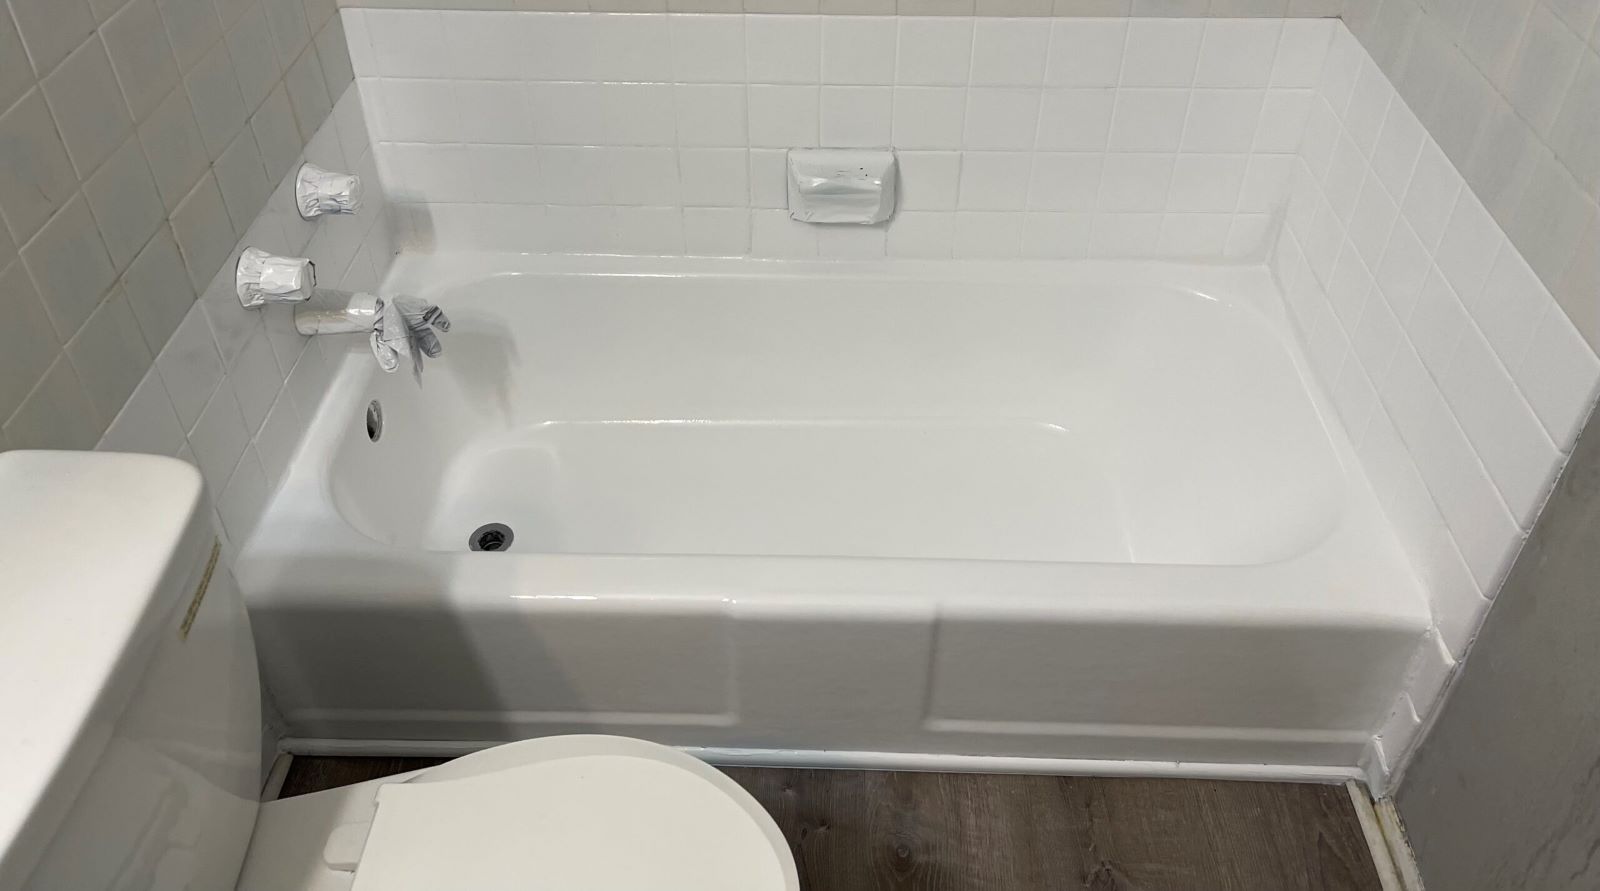 Affordable Bathtub Resurfacing Villa Ridge, MO | Bathtub Refinishing in Villa Ridge, MO | A New Look Resurfacing